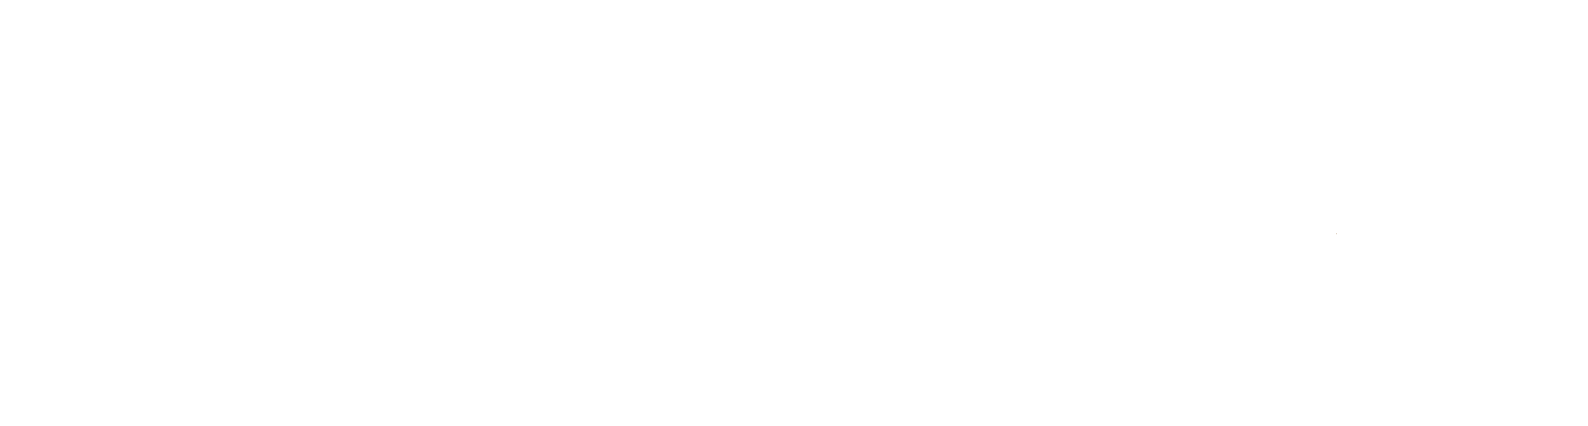 Scaling Up Coach